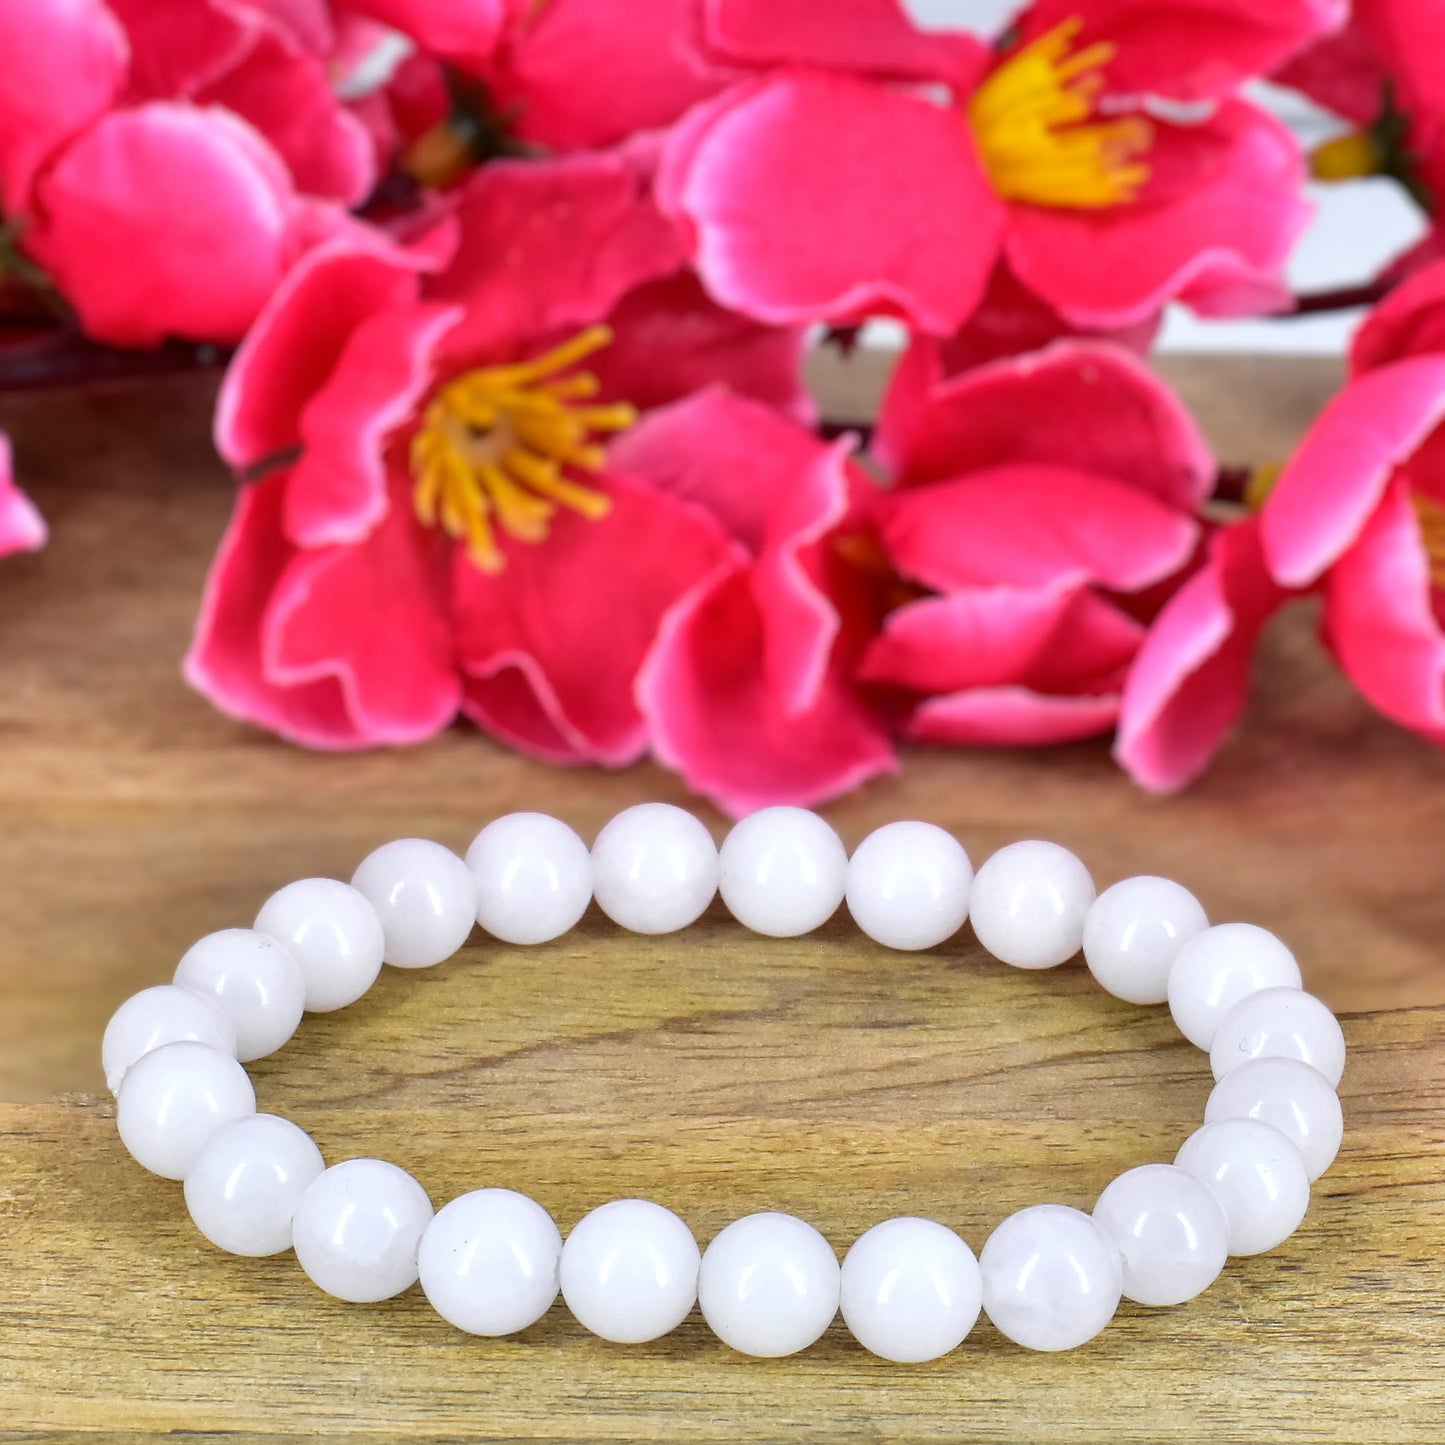 White Quartz Crystal Stone Bracelet for Reiki Healing